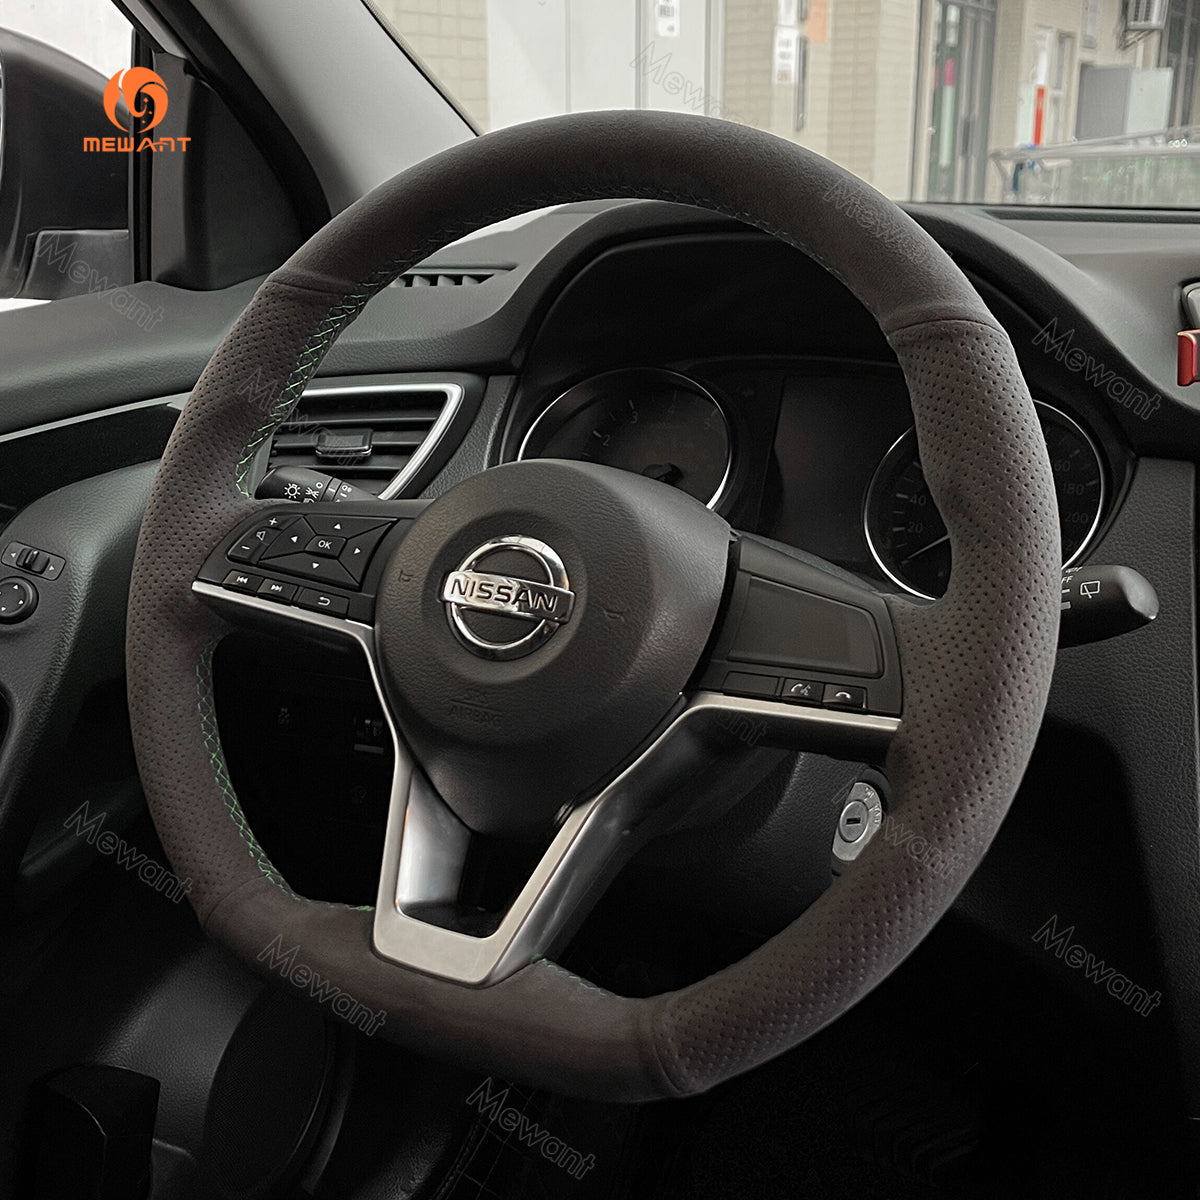 MEWANT Hand Stitch Car Steering Wheel Cover for Nissan Note / Tiida / –  Mewant steering wheel cover